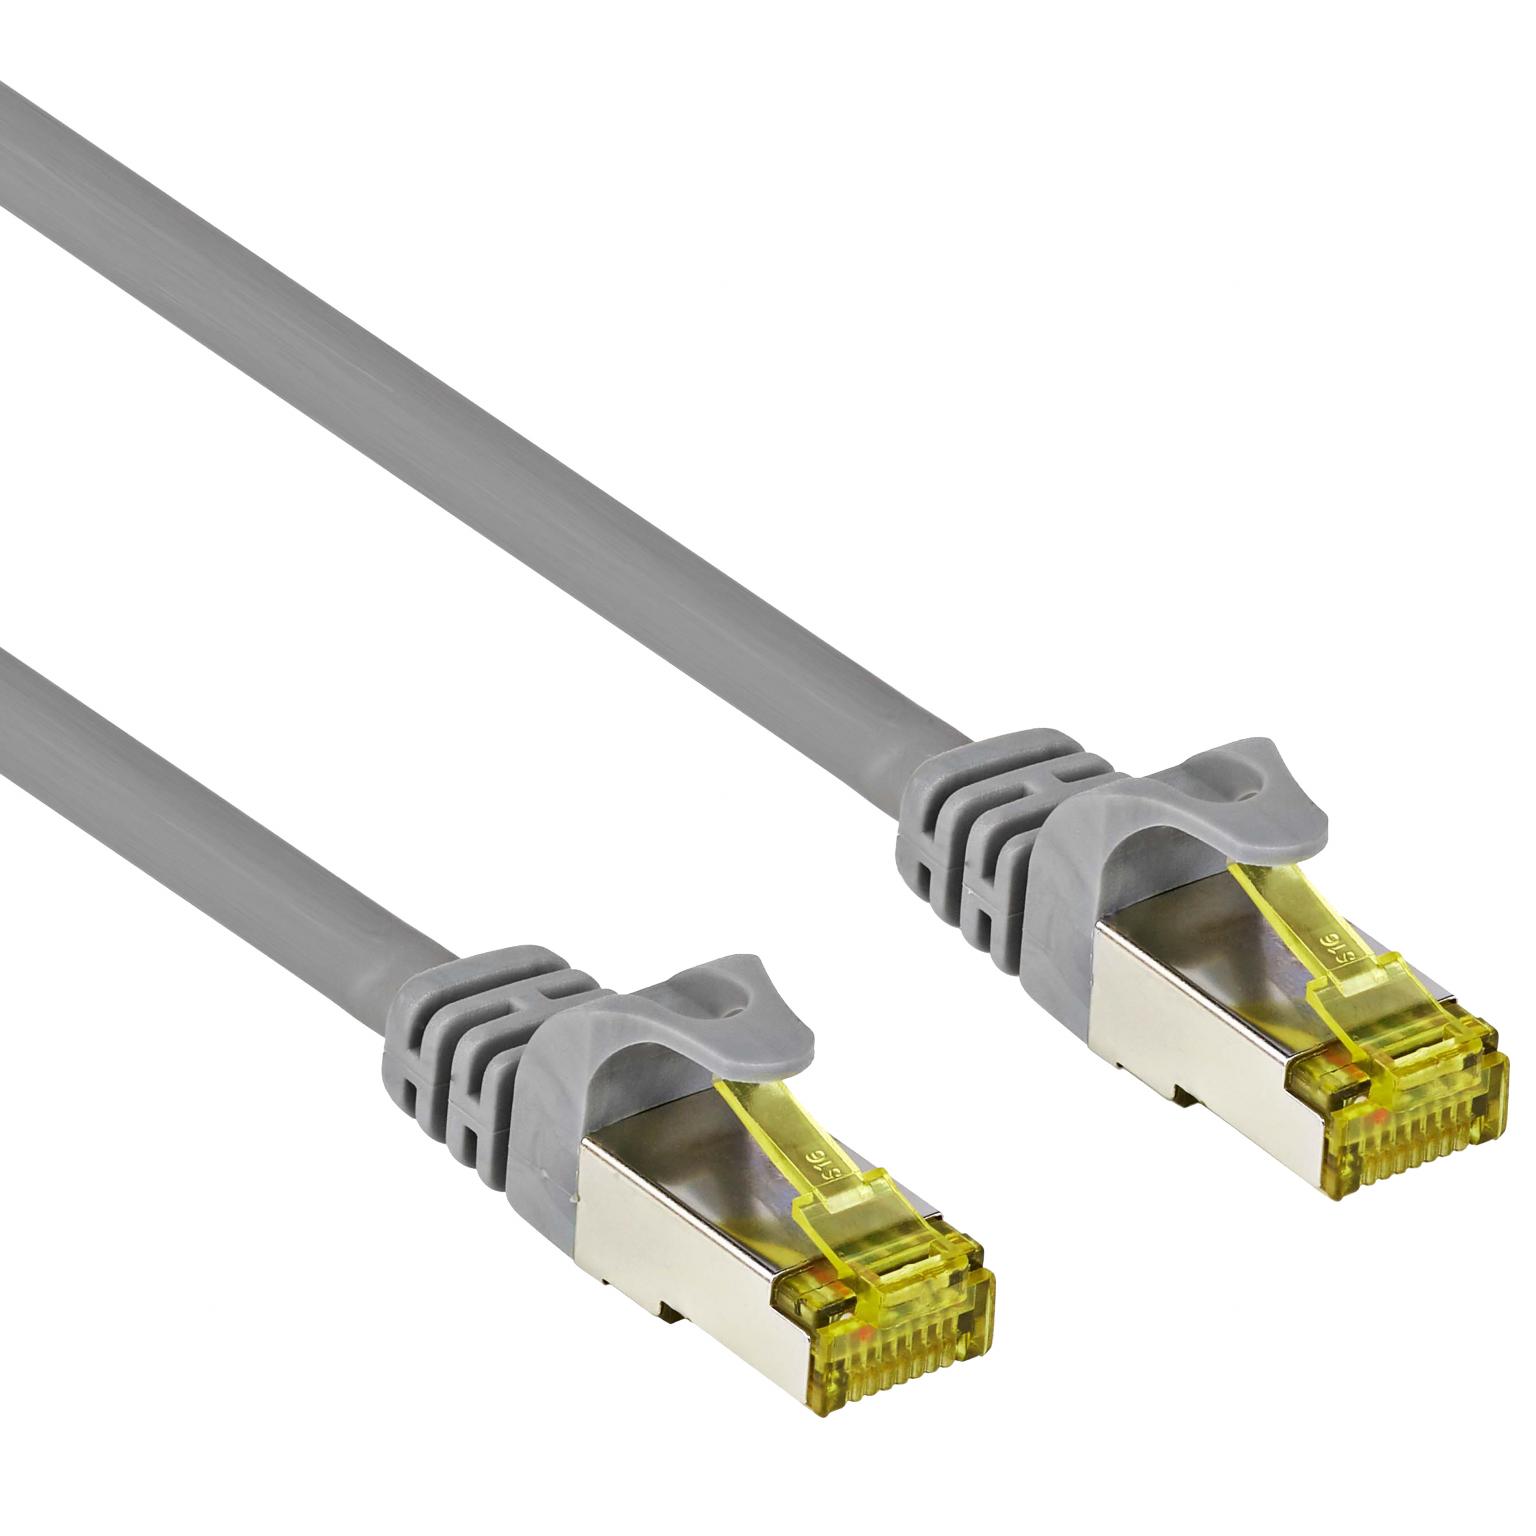 S/FTP kabel - 0.25 meter - Grijs - Allteq